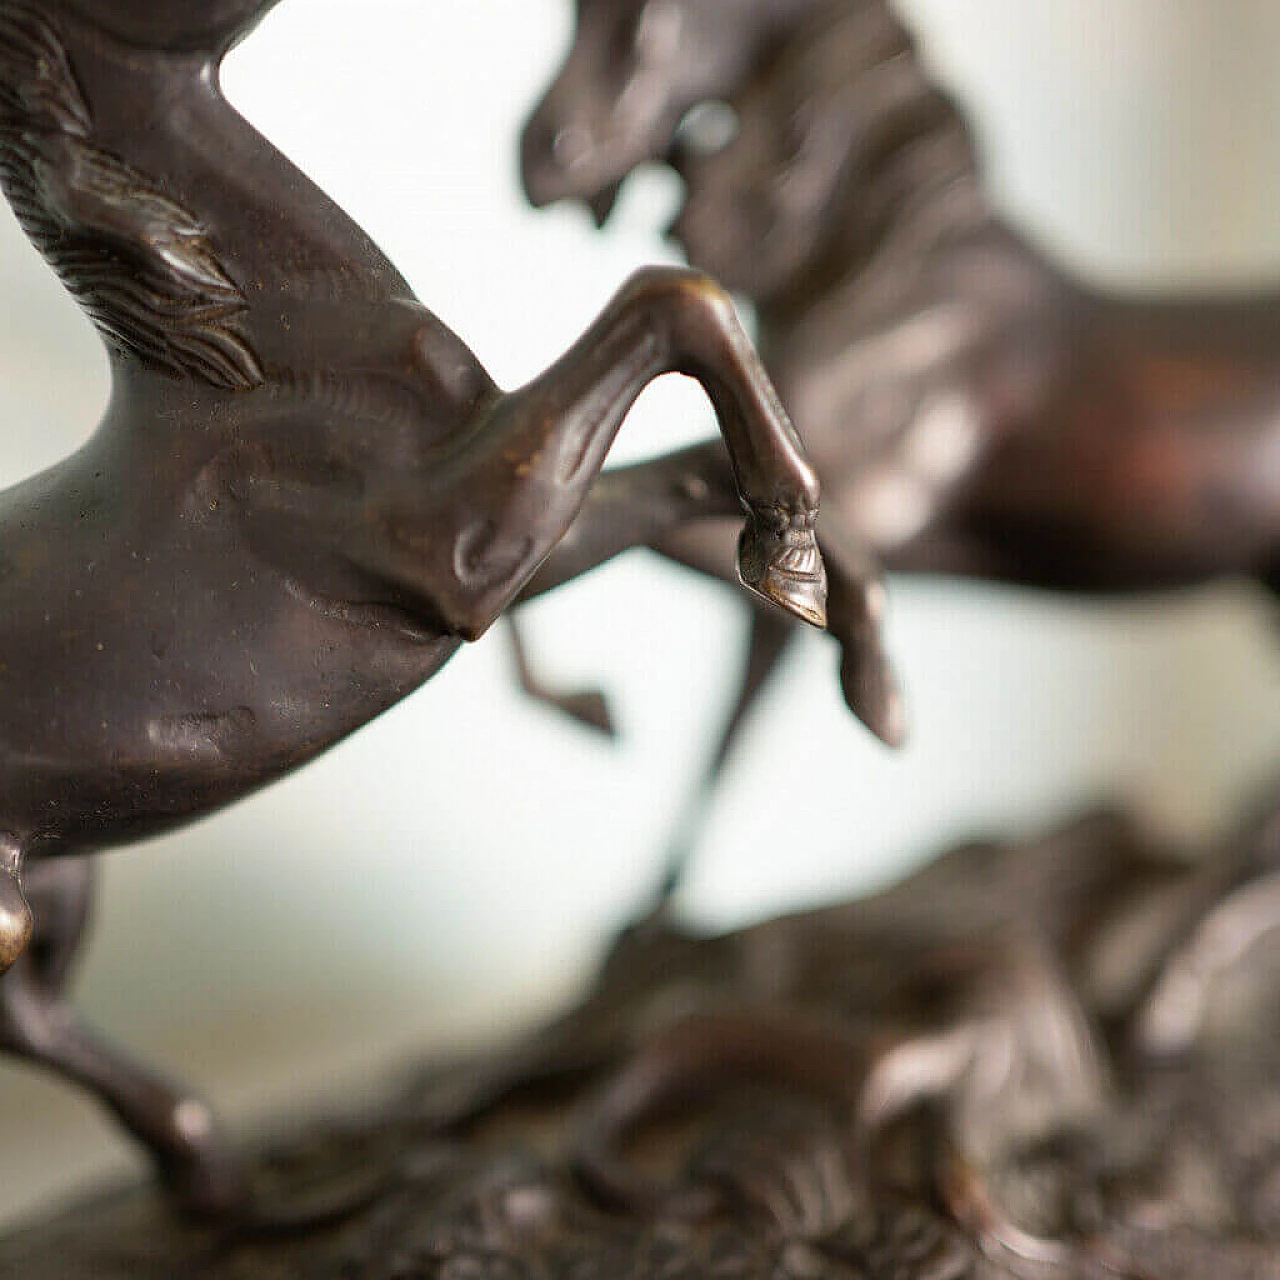 Bronze statue of rampant horses, 19th century 1197808